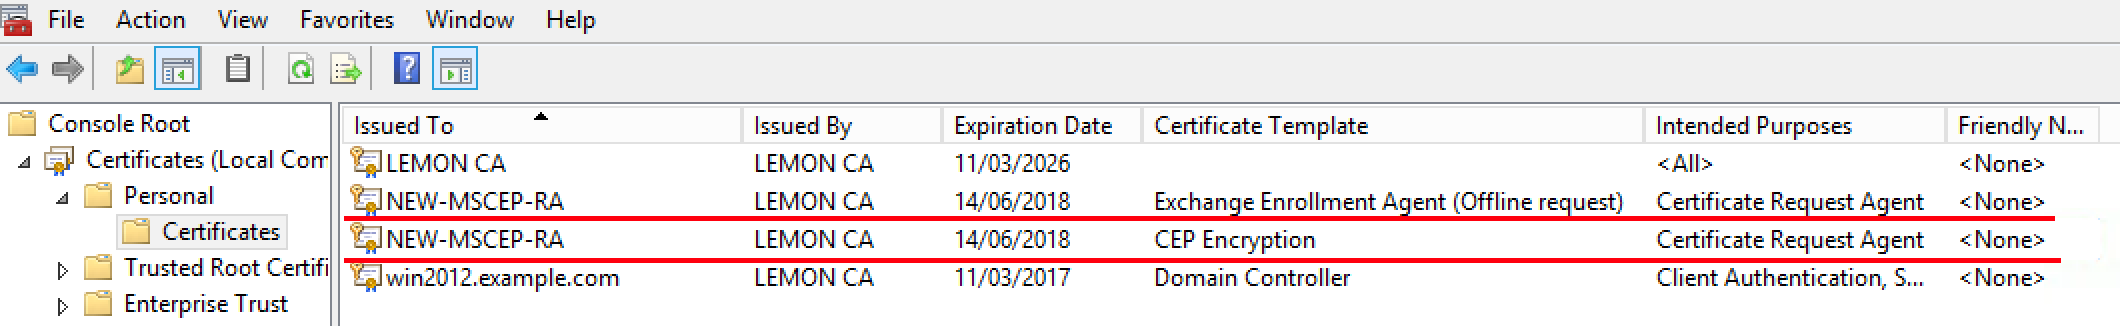 200543-Renew-SCEP-RA-certificate-on-Windows-Ser-08.png